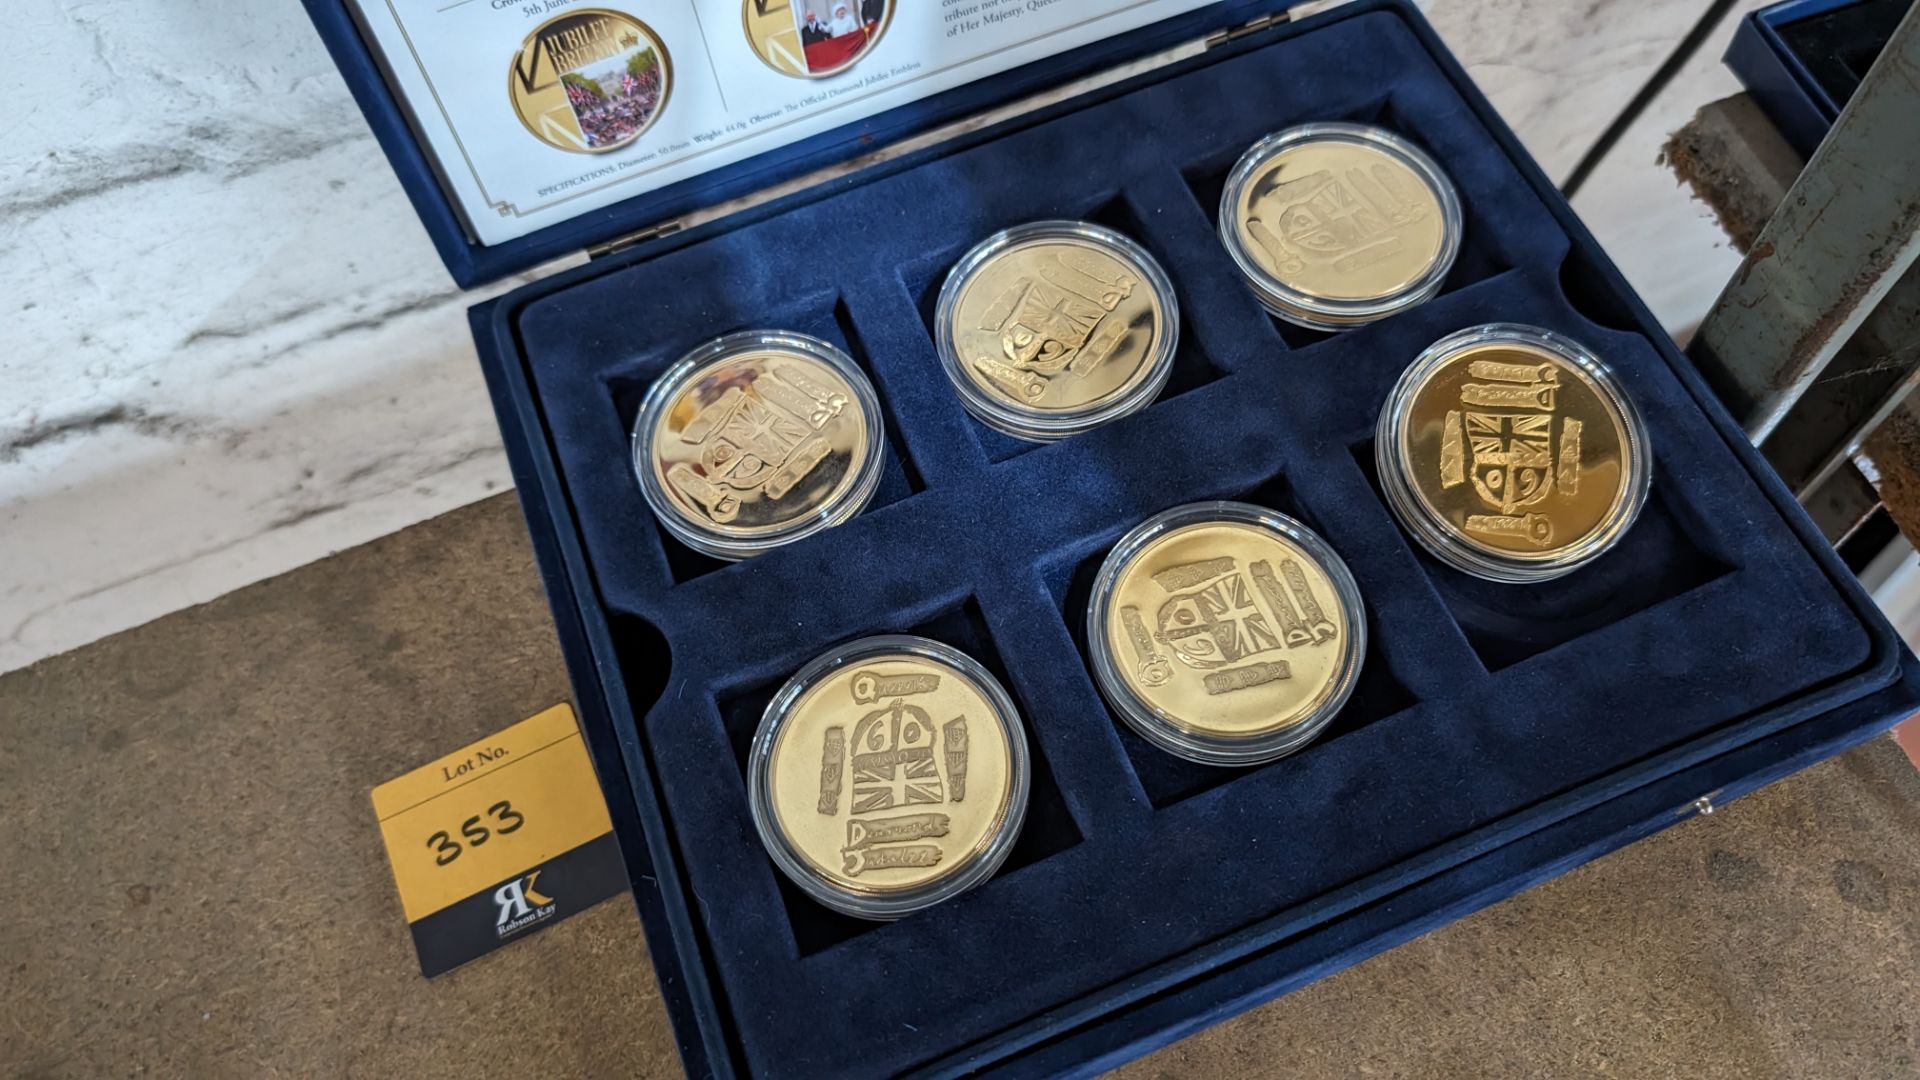 Diamond Jubilee set of 6 decorative coins including presentation case - Image 9 of 12